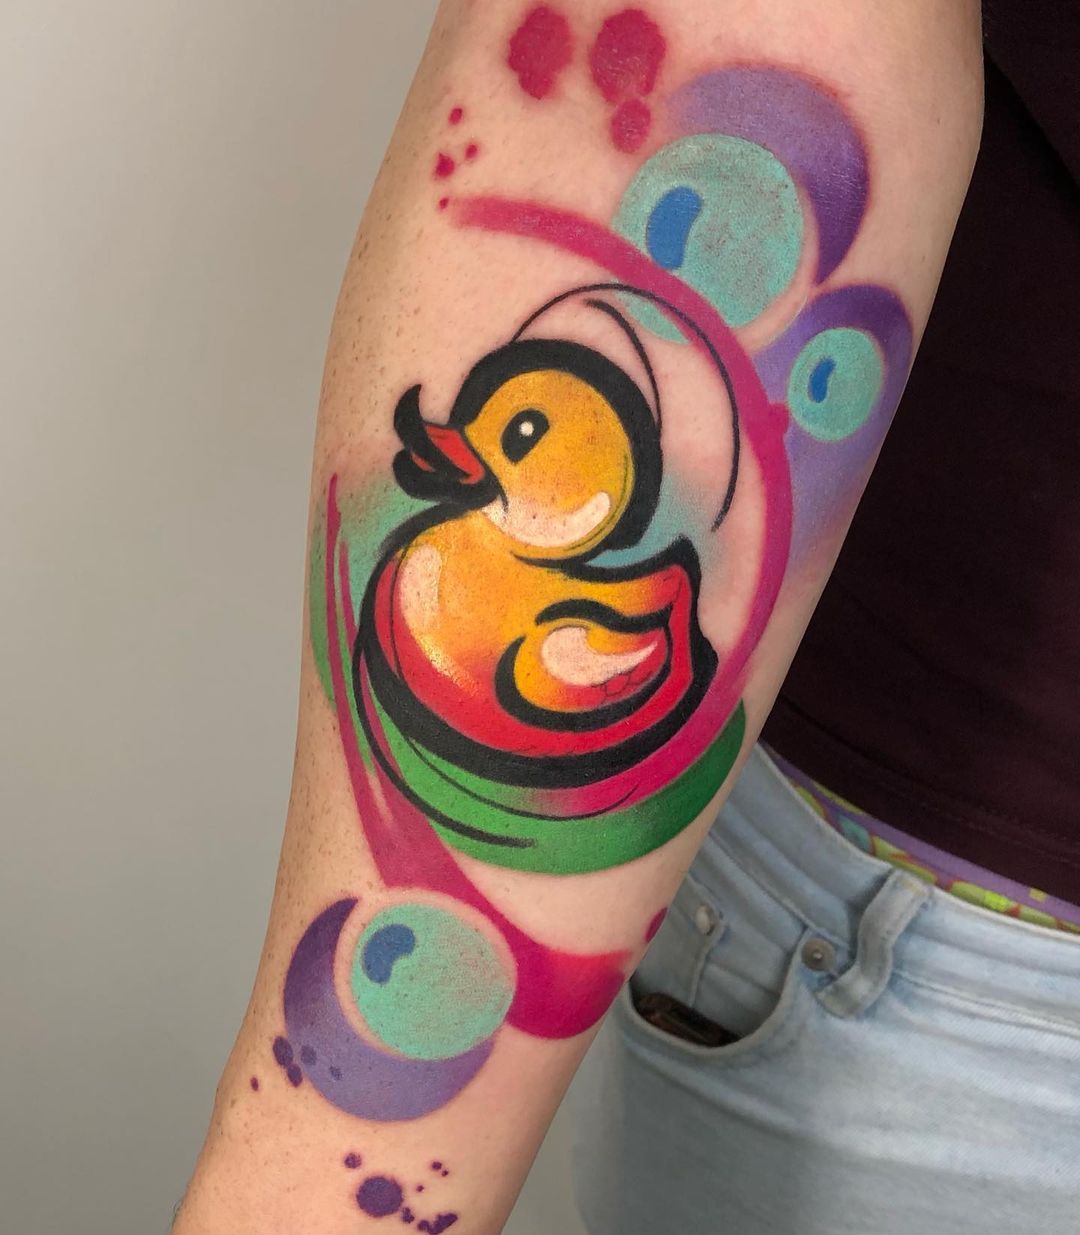 dennis williams - Business Owner - Lucky Duck Tattoos | LinkedIn